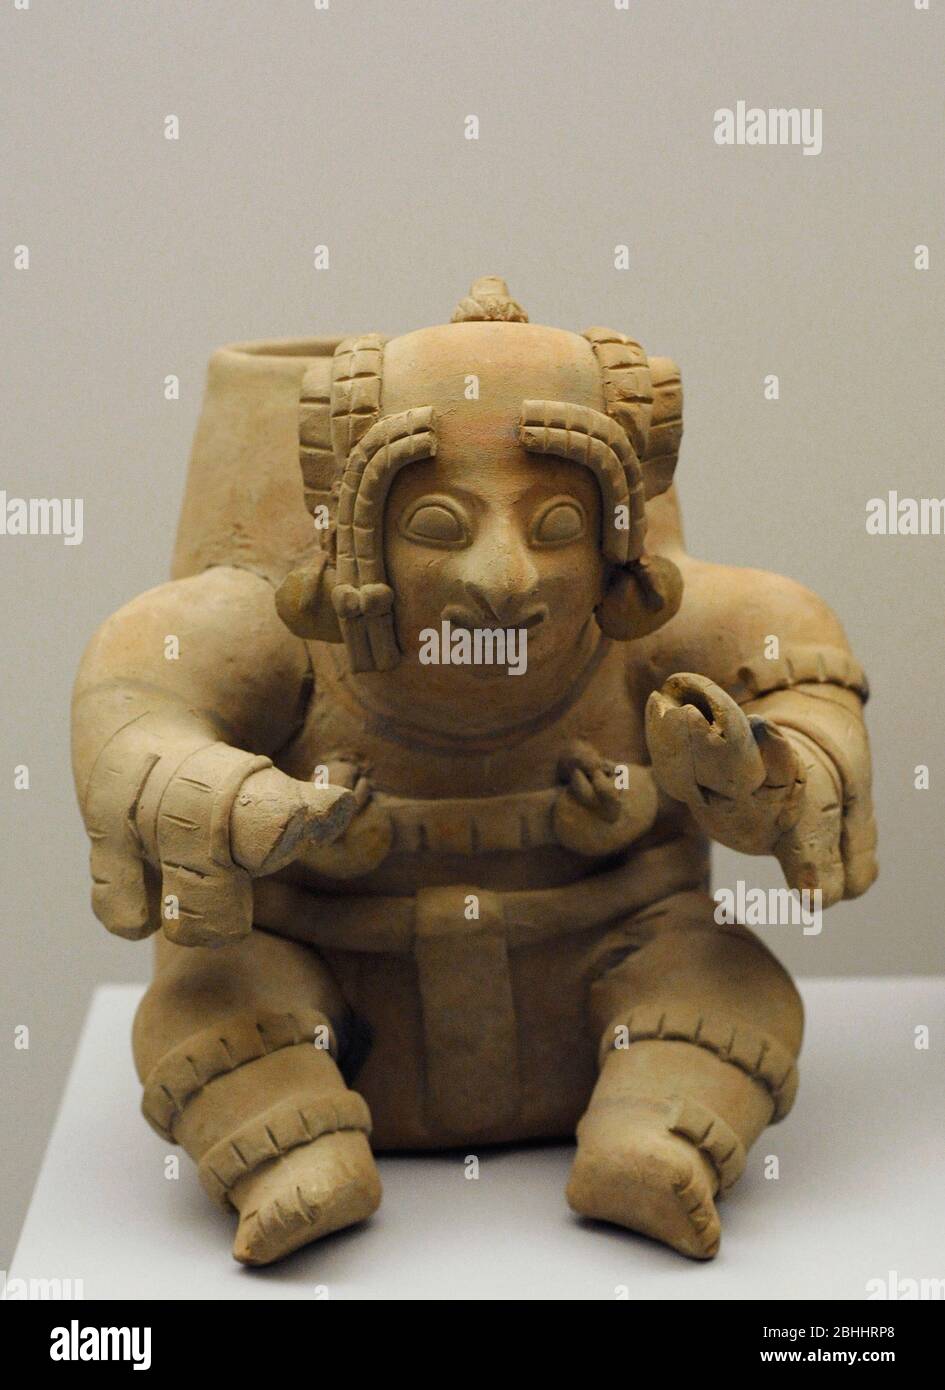 Vessel in the shape of a sitting human figure. Ceramic. Jama-Coaque culture. Regional Development Period (500 BC-500 AD). Coast of Ecuador, South America. Museum of the Americas, Madrid, Spain. Stock Photo